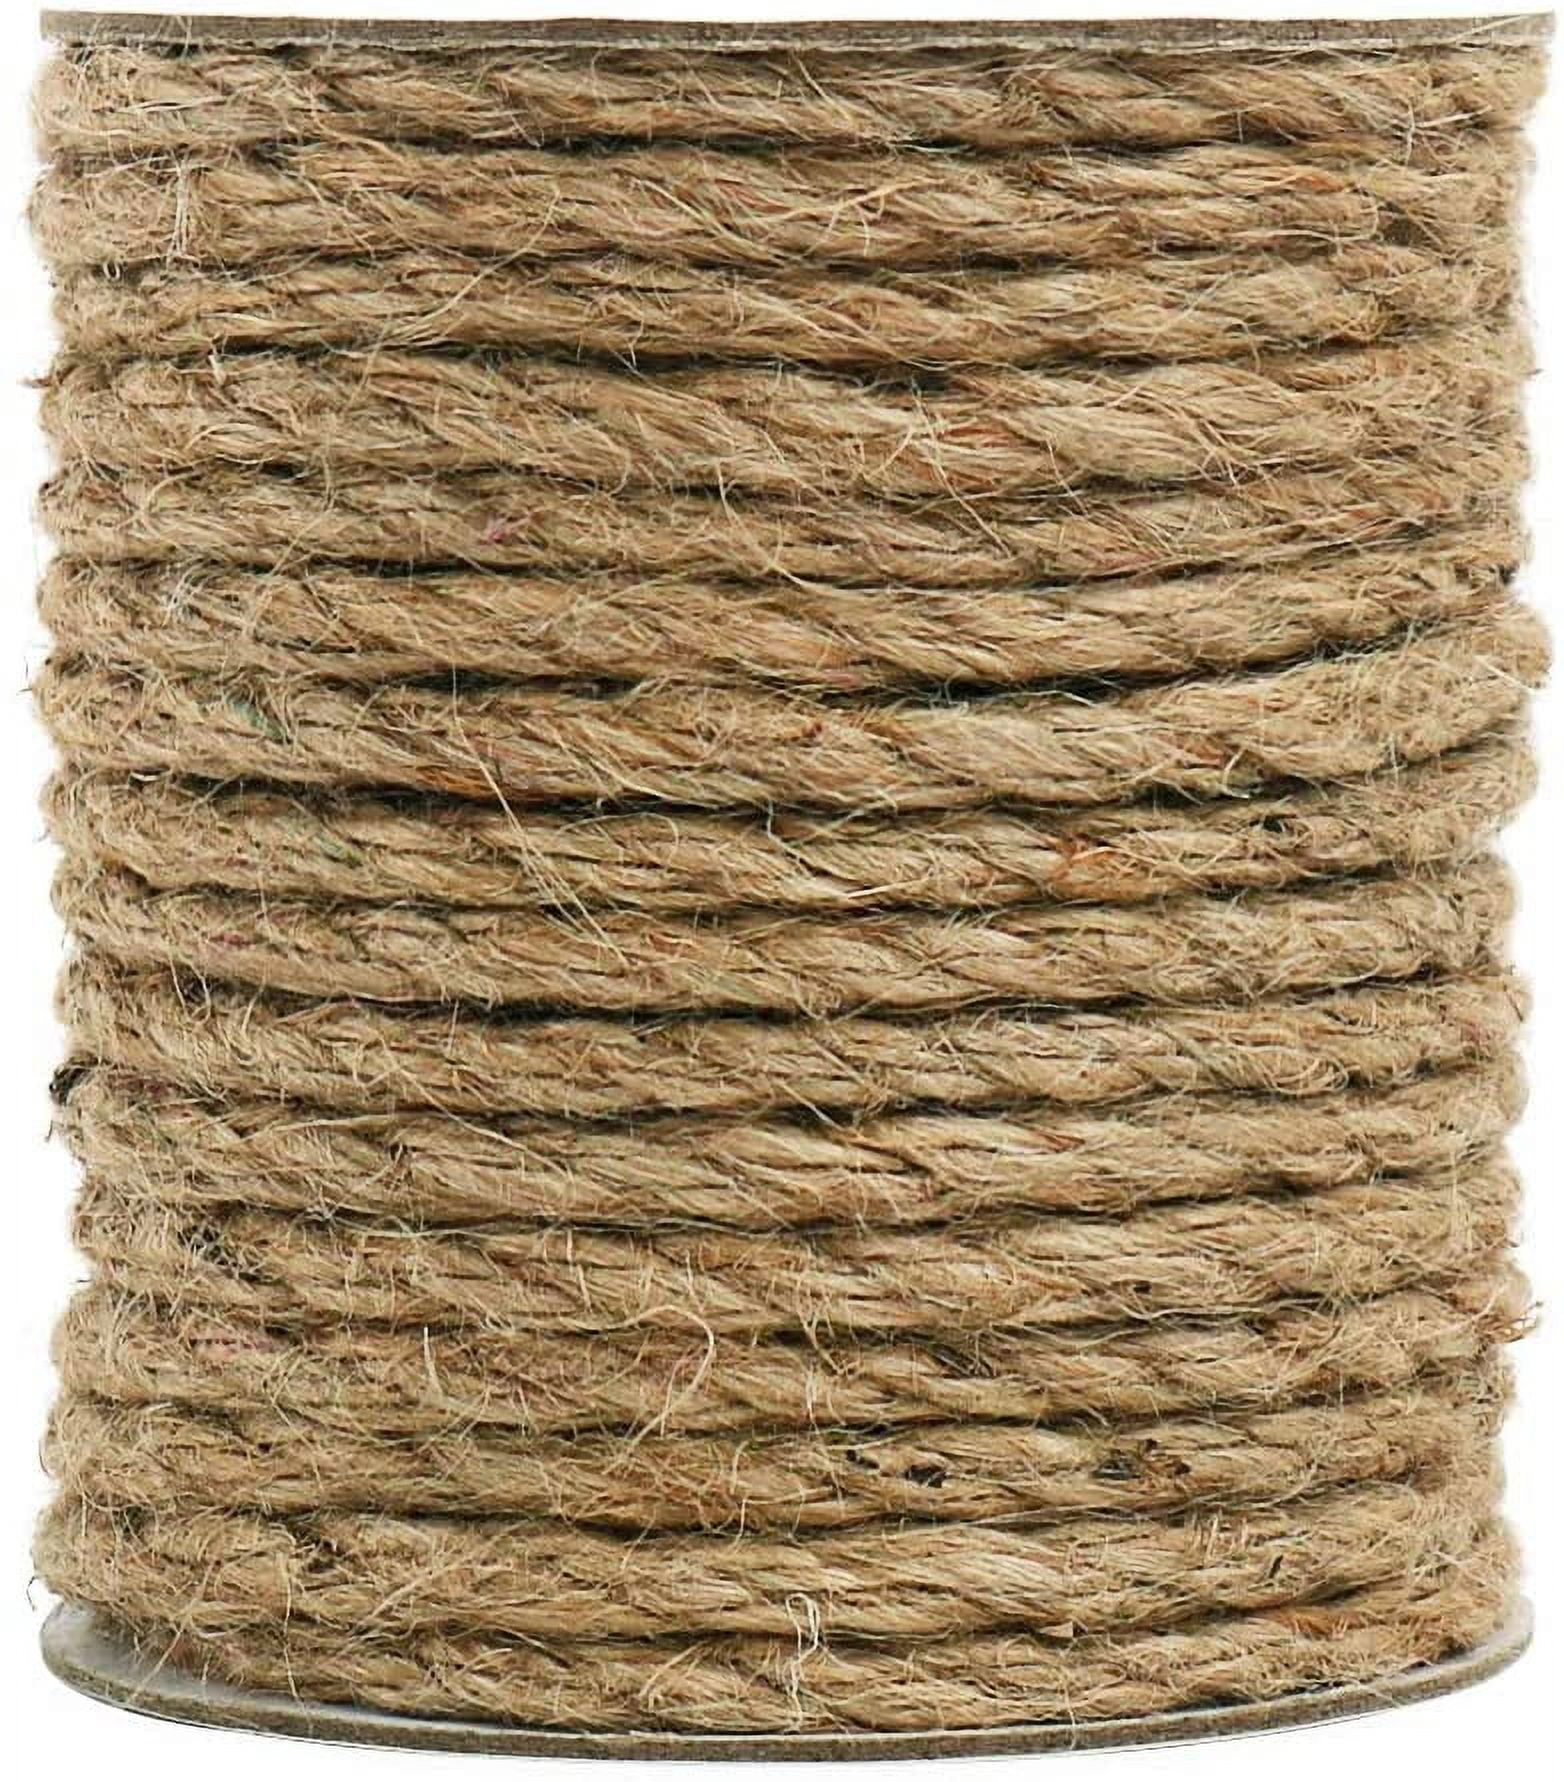 Natural Brown Jute Hemp Rope Twine String Cord Shank Craft String